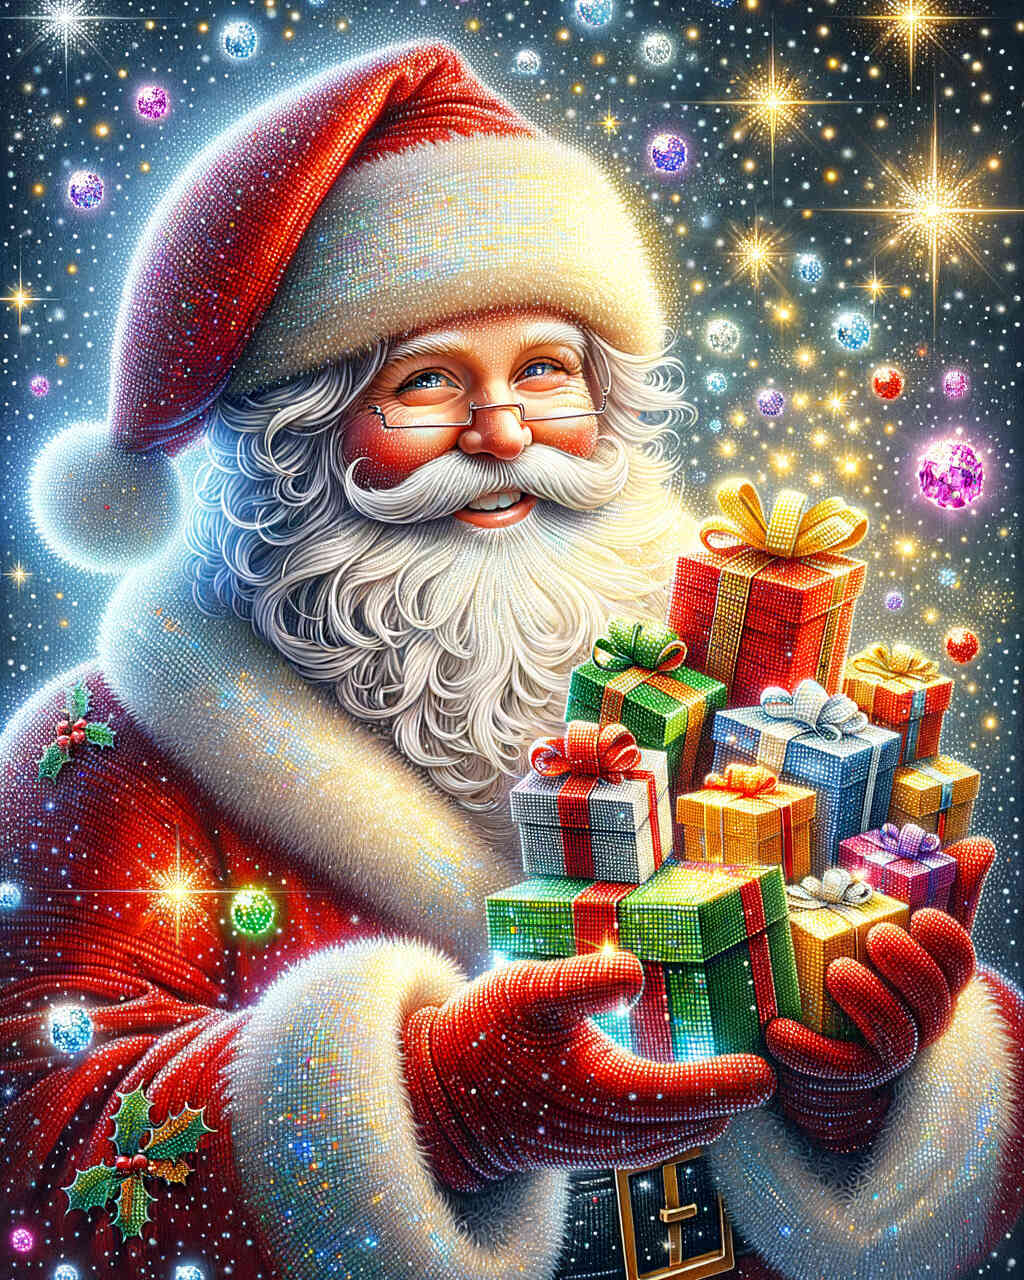 Diamond Painting - Geschenkbepackter Weihnachtsmann